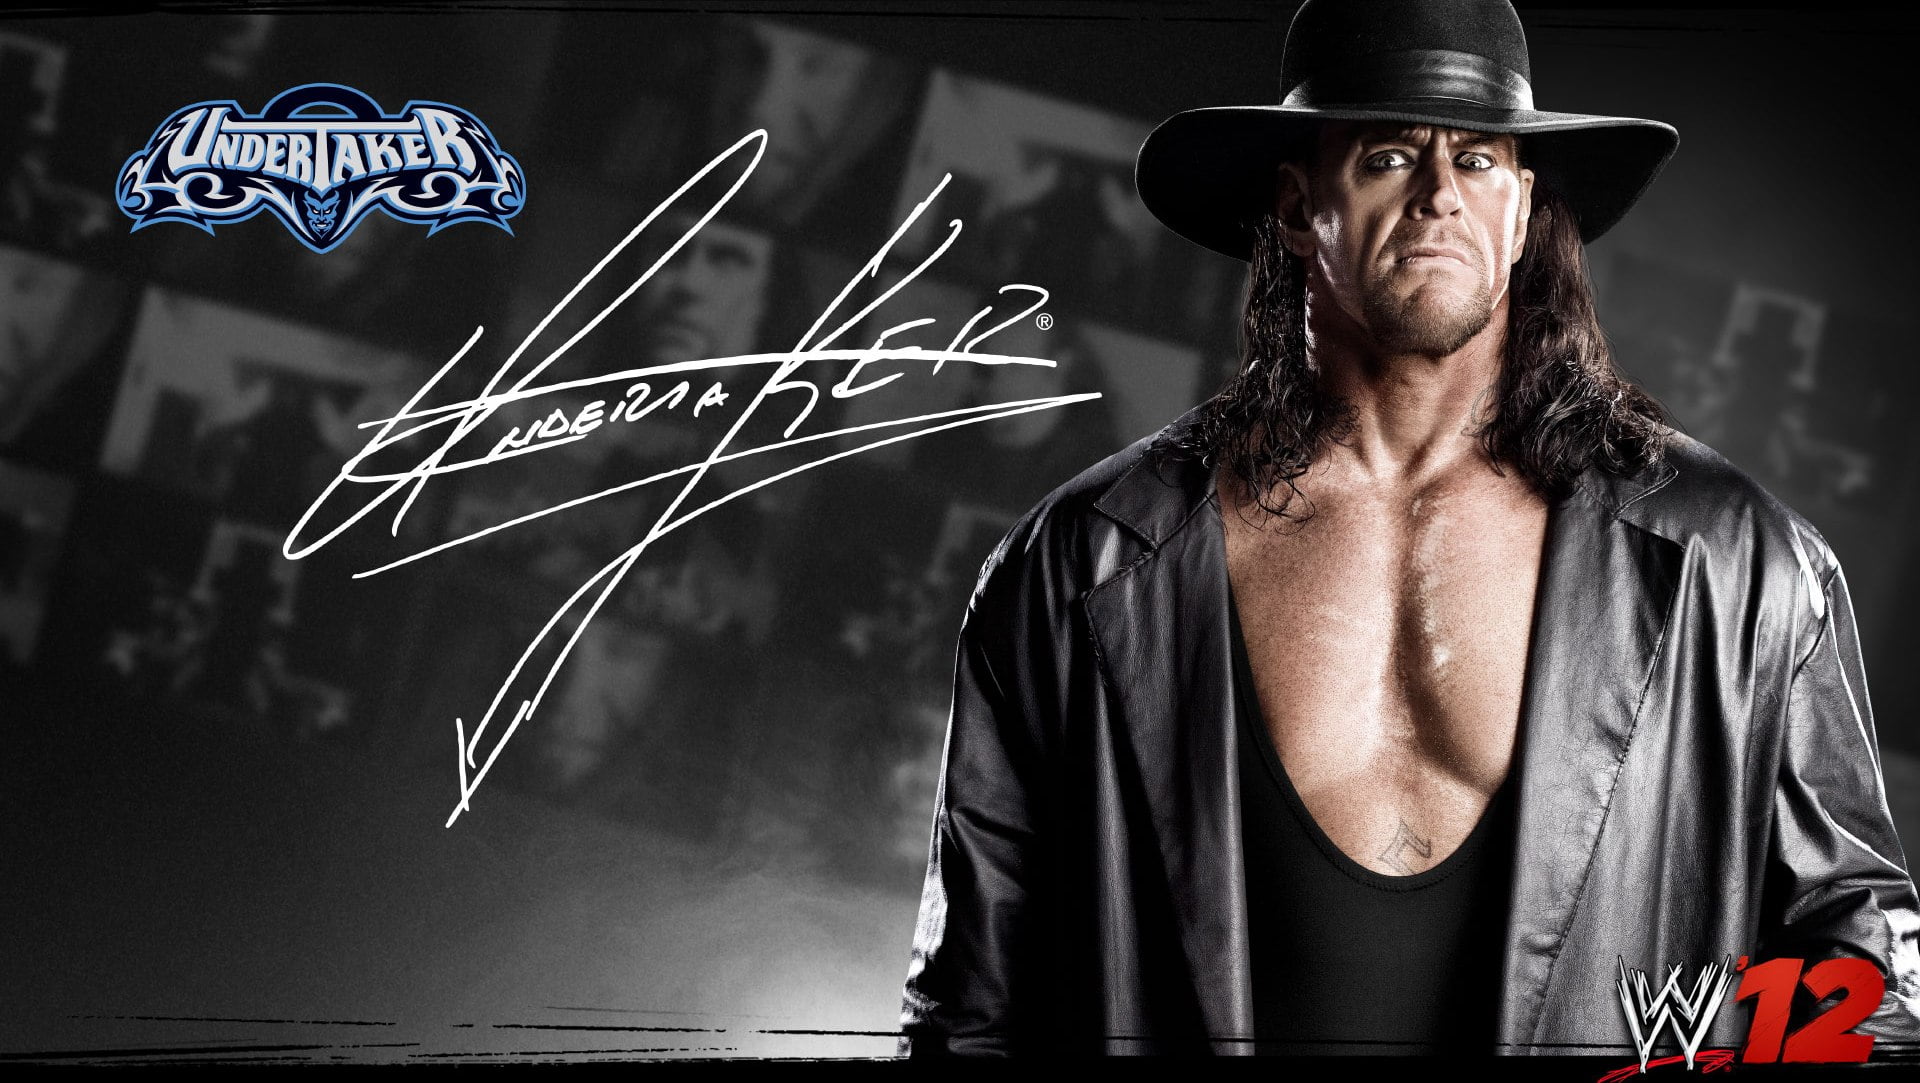 The Undertaker  WWE, WWE Undertaker, wwe champion, clothing, hat